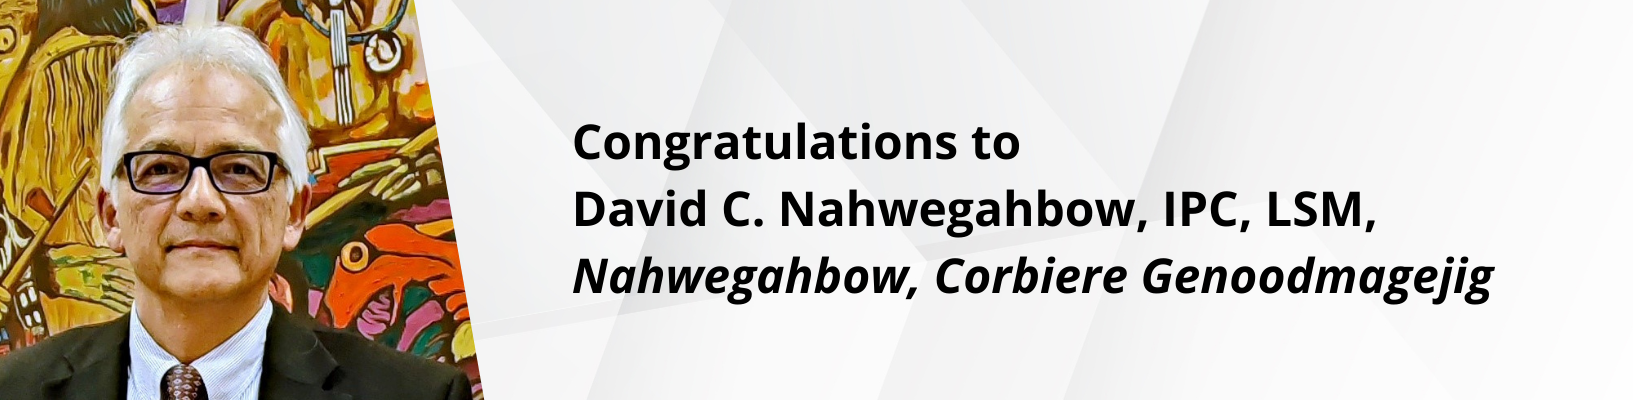 Congratulations to David C. Nahwegahbow, IPC, LSM